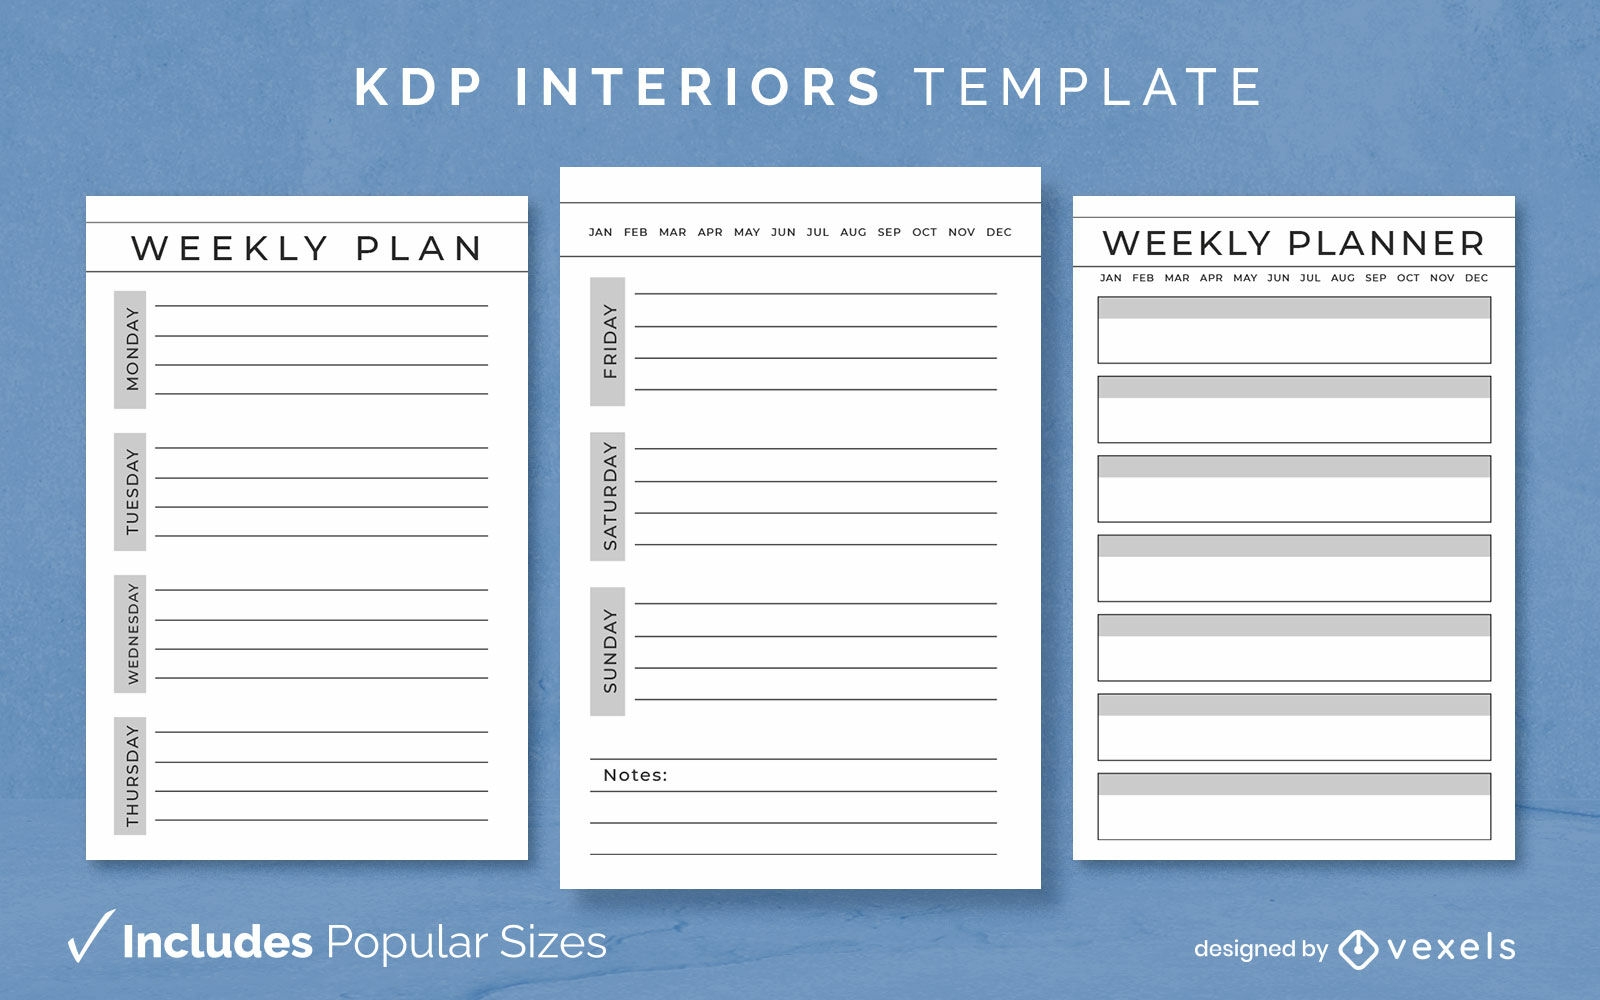 Weekly sheet planner KDP interior template design